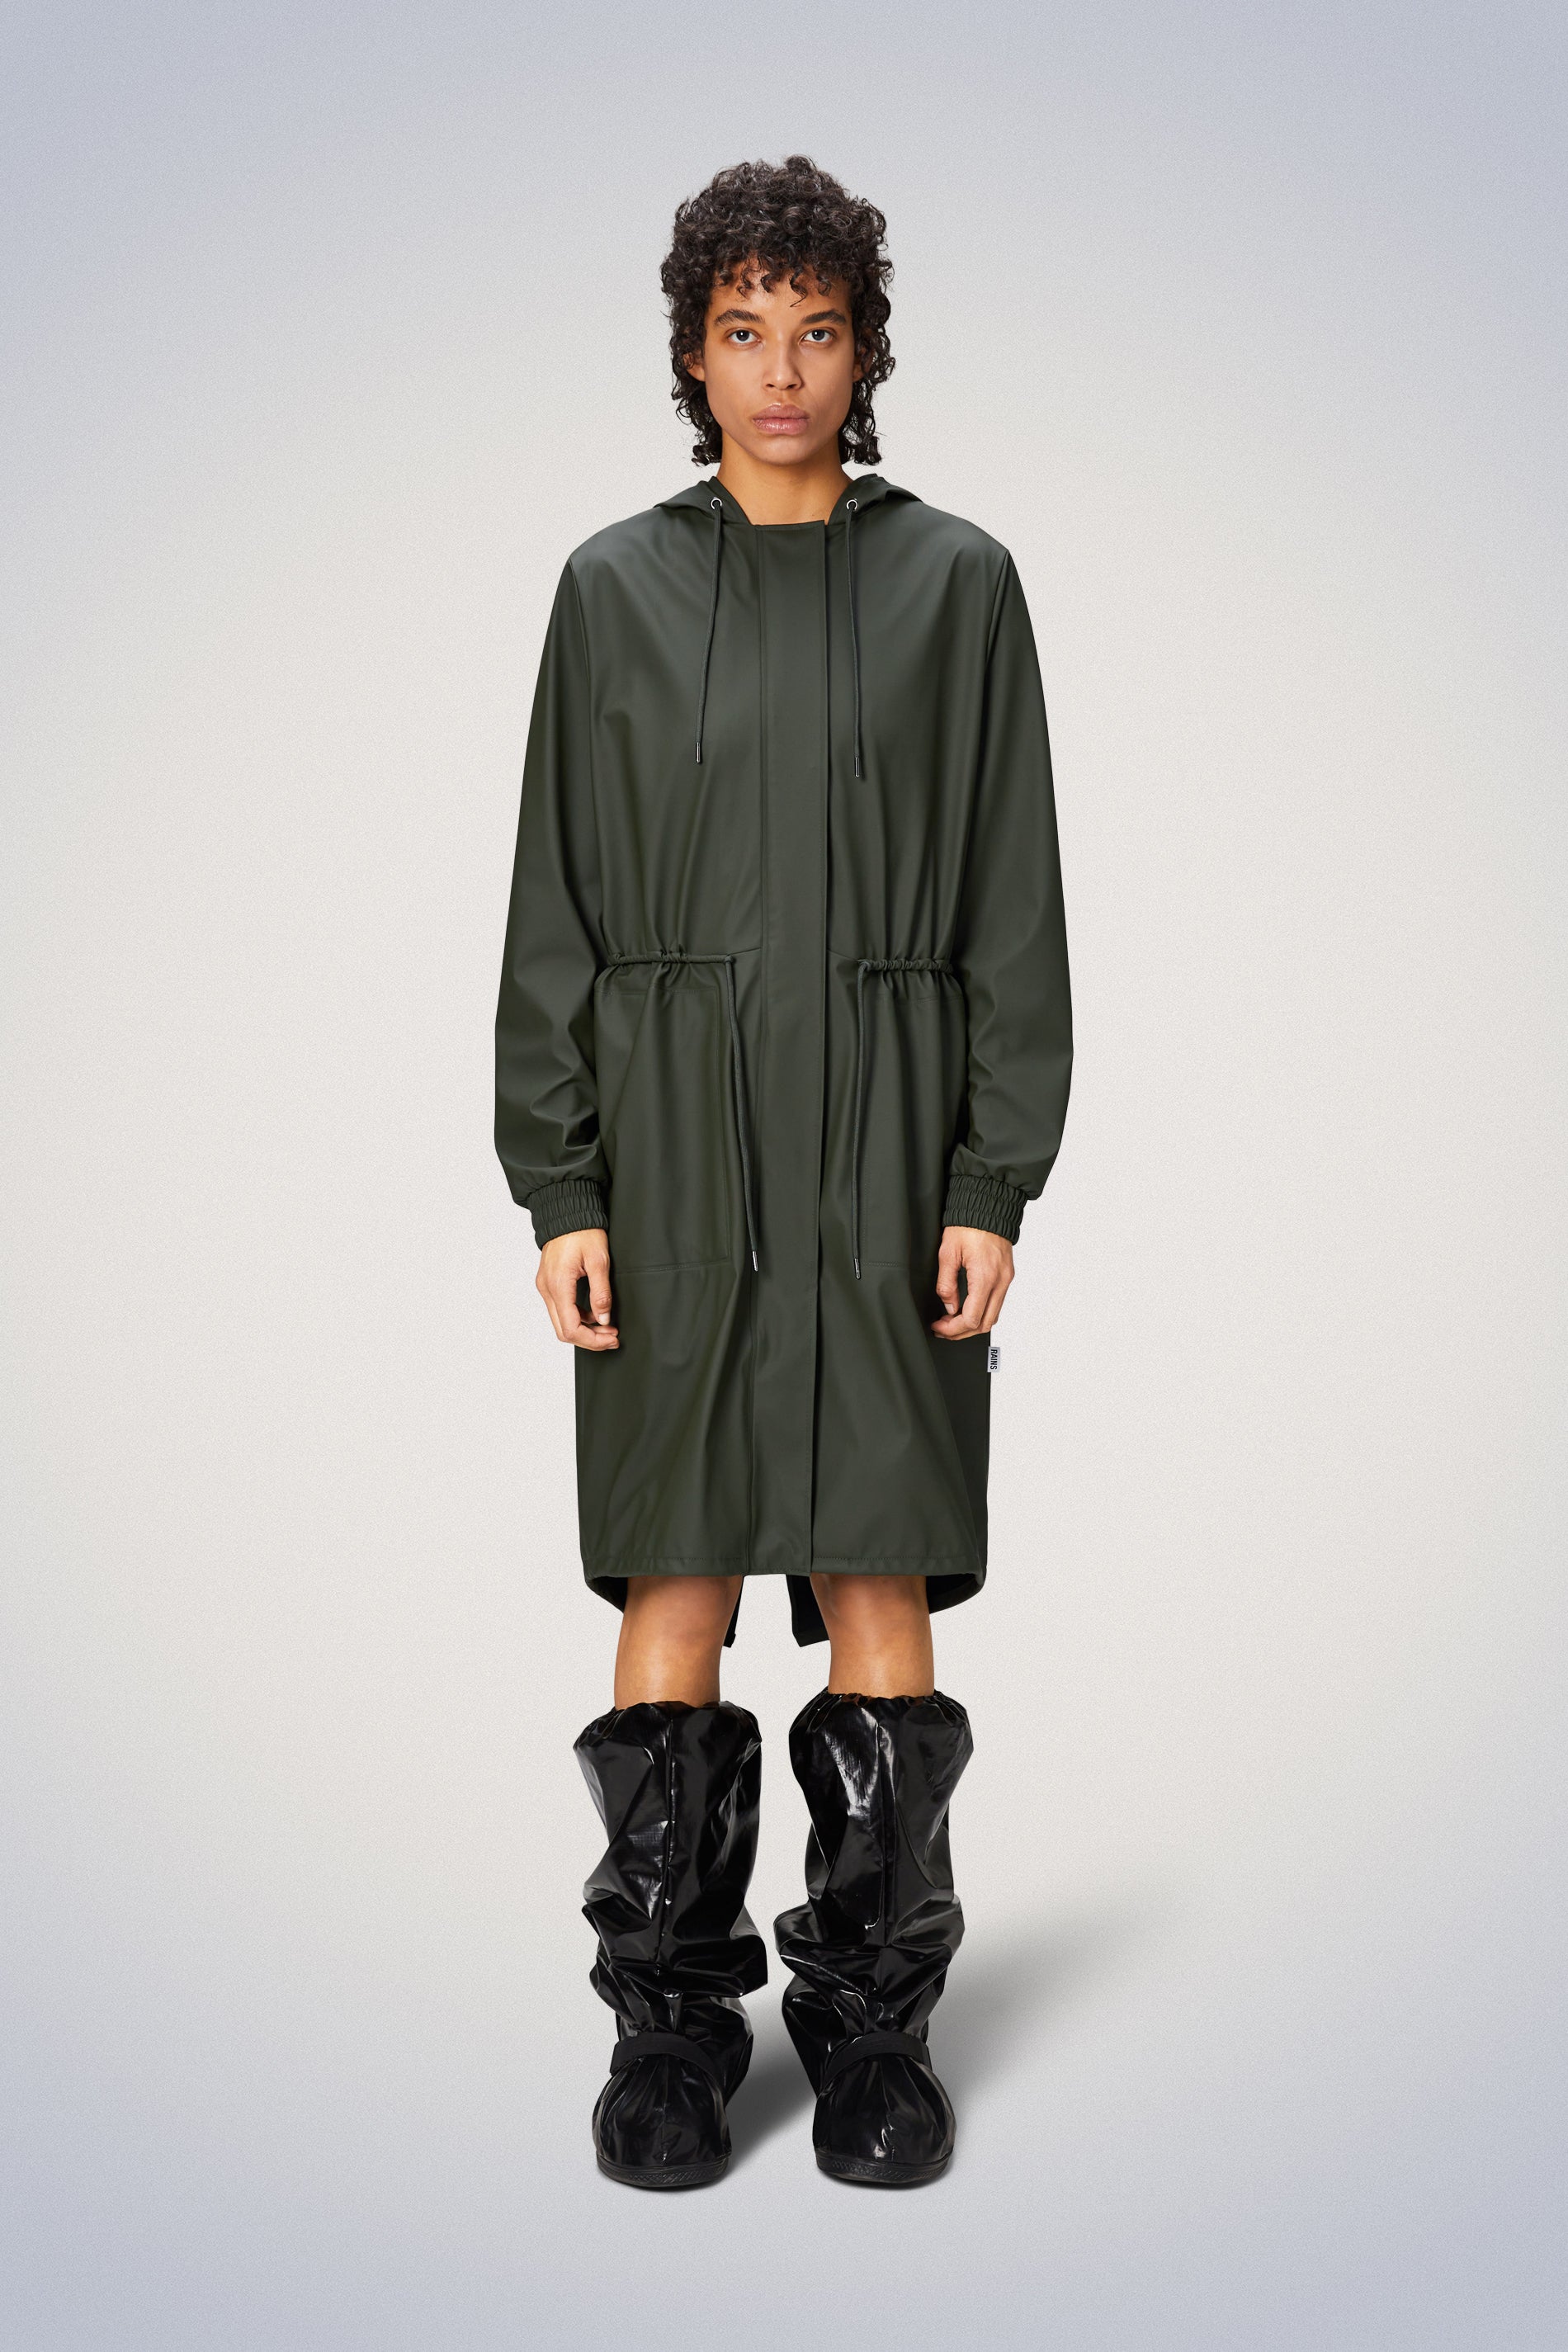 Raingear for Women | Buy Rainwear & Outfits for Women | Rains®